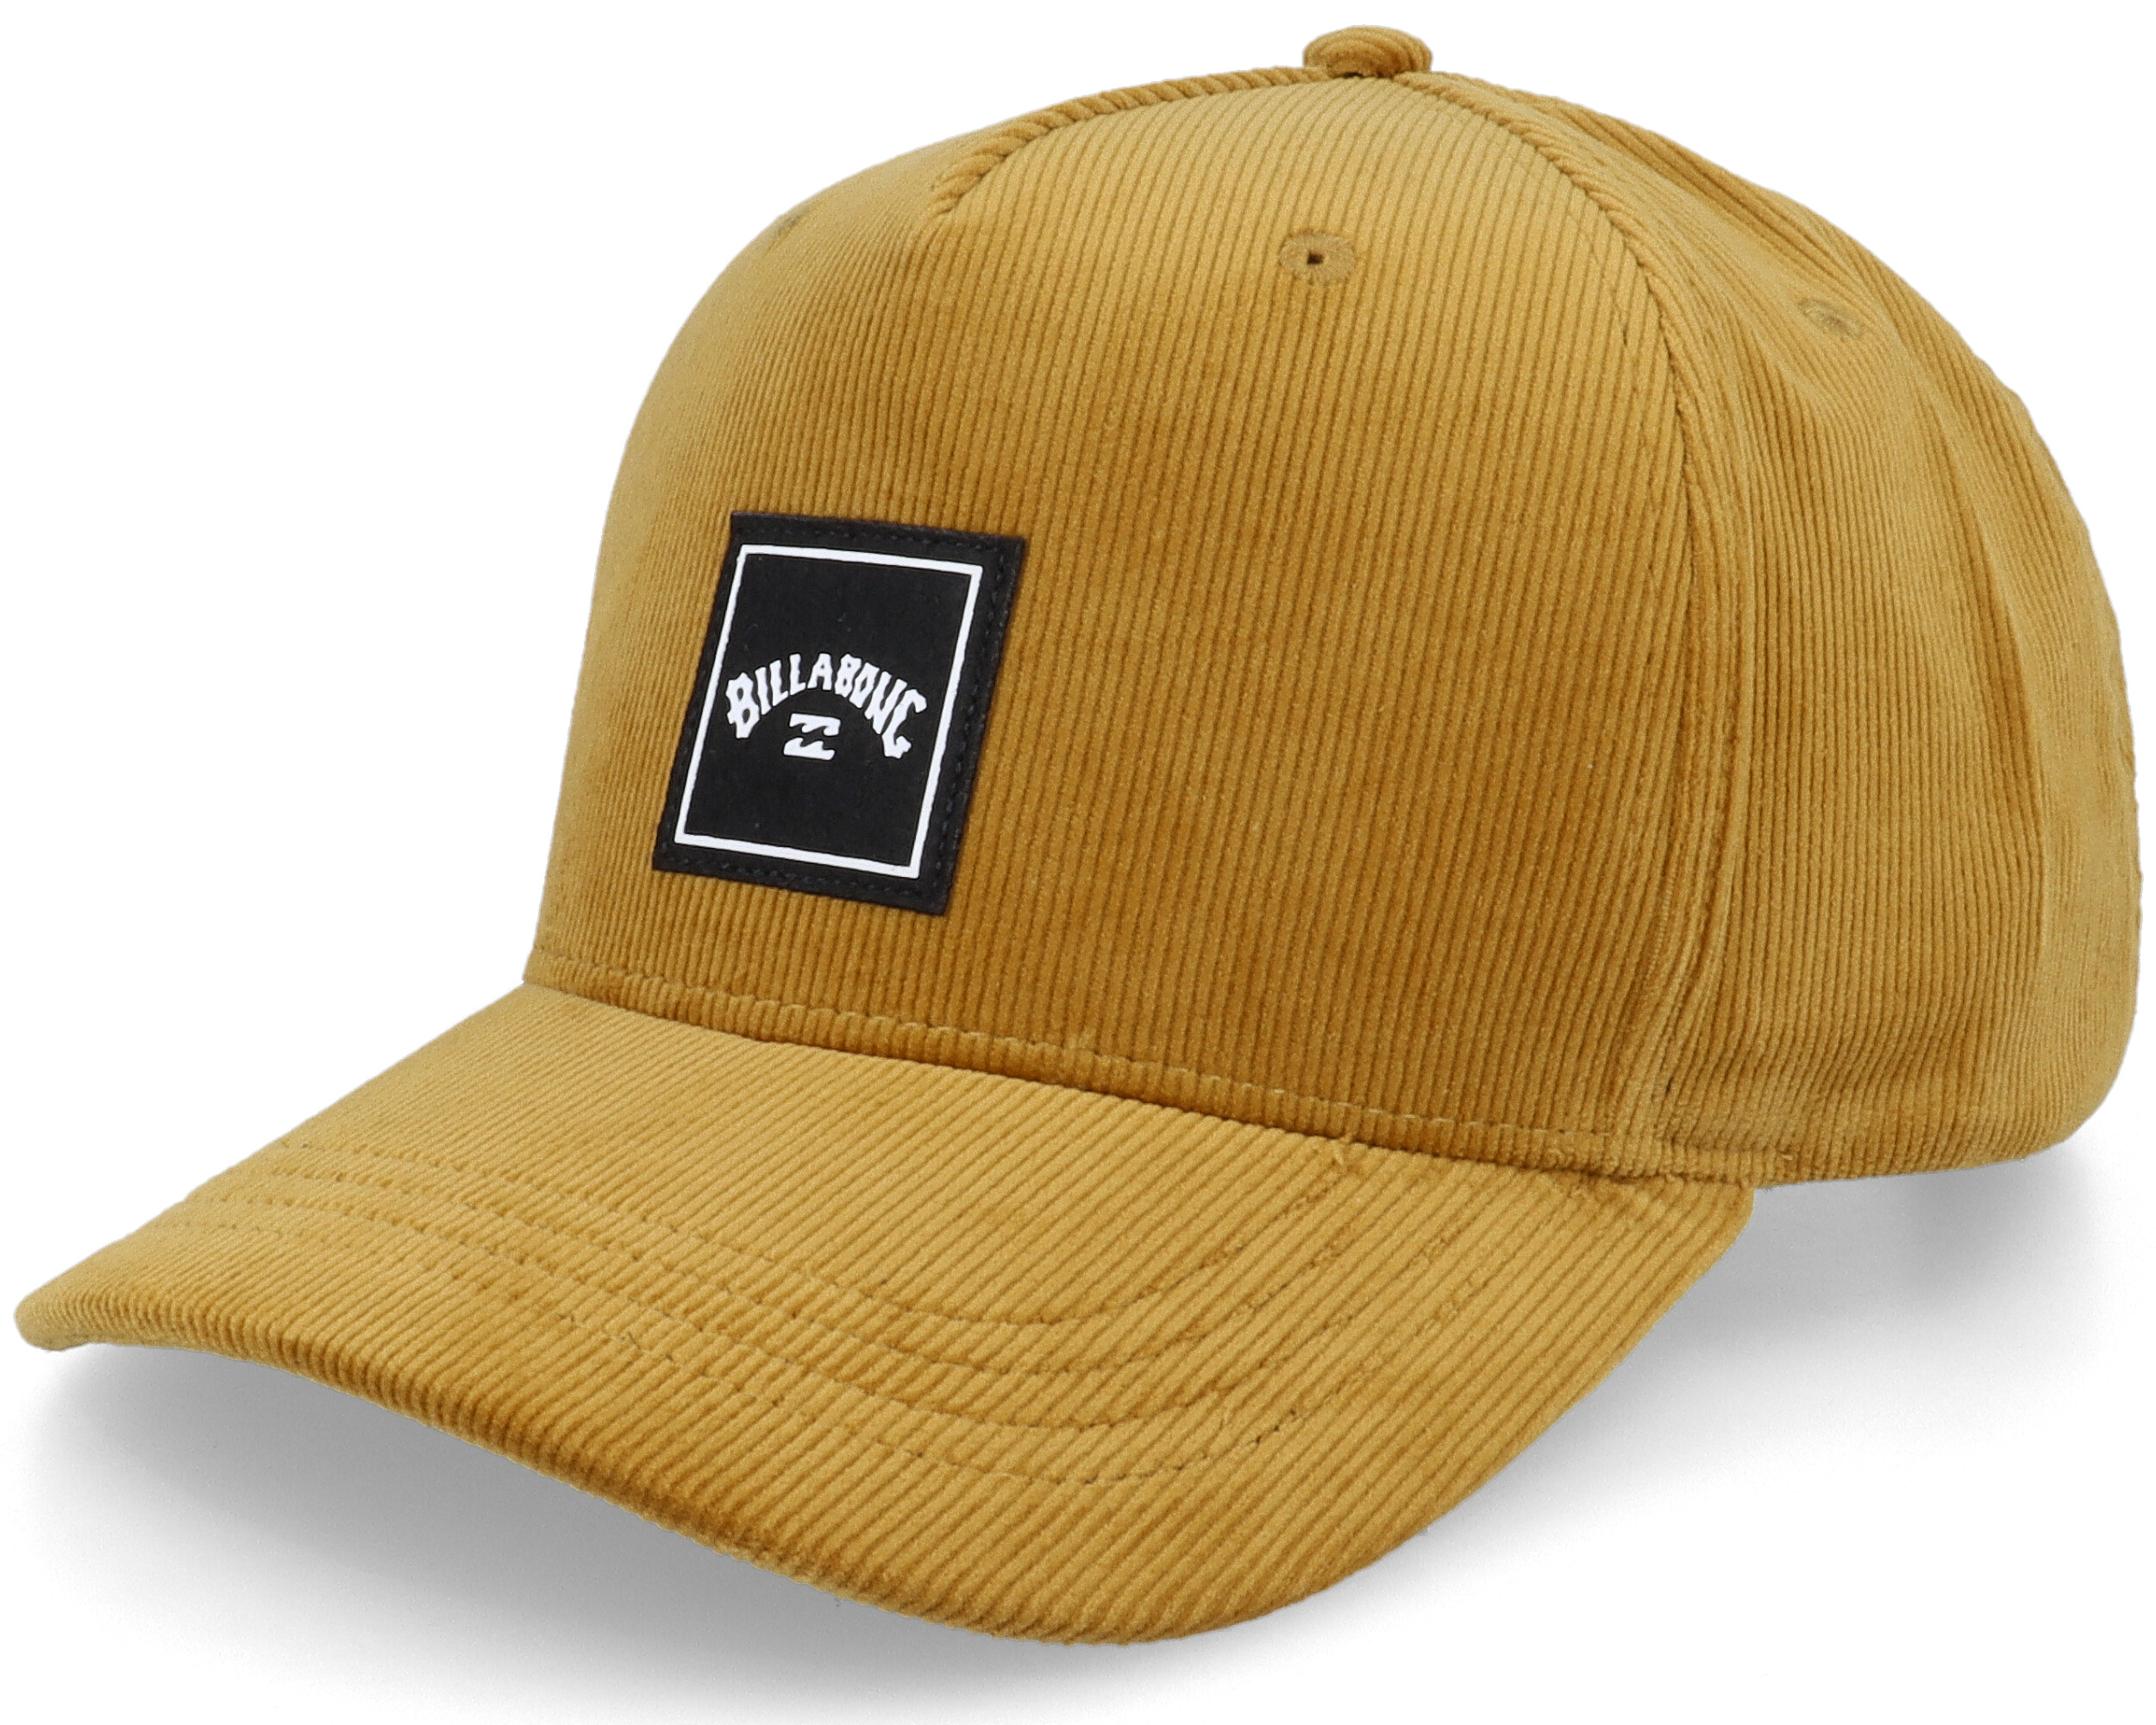 Billabong Gold Adjustable cap Stacked -